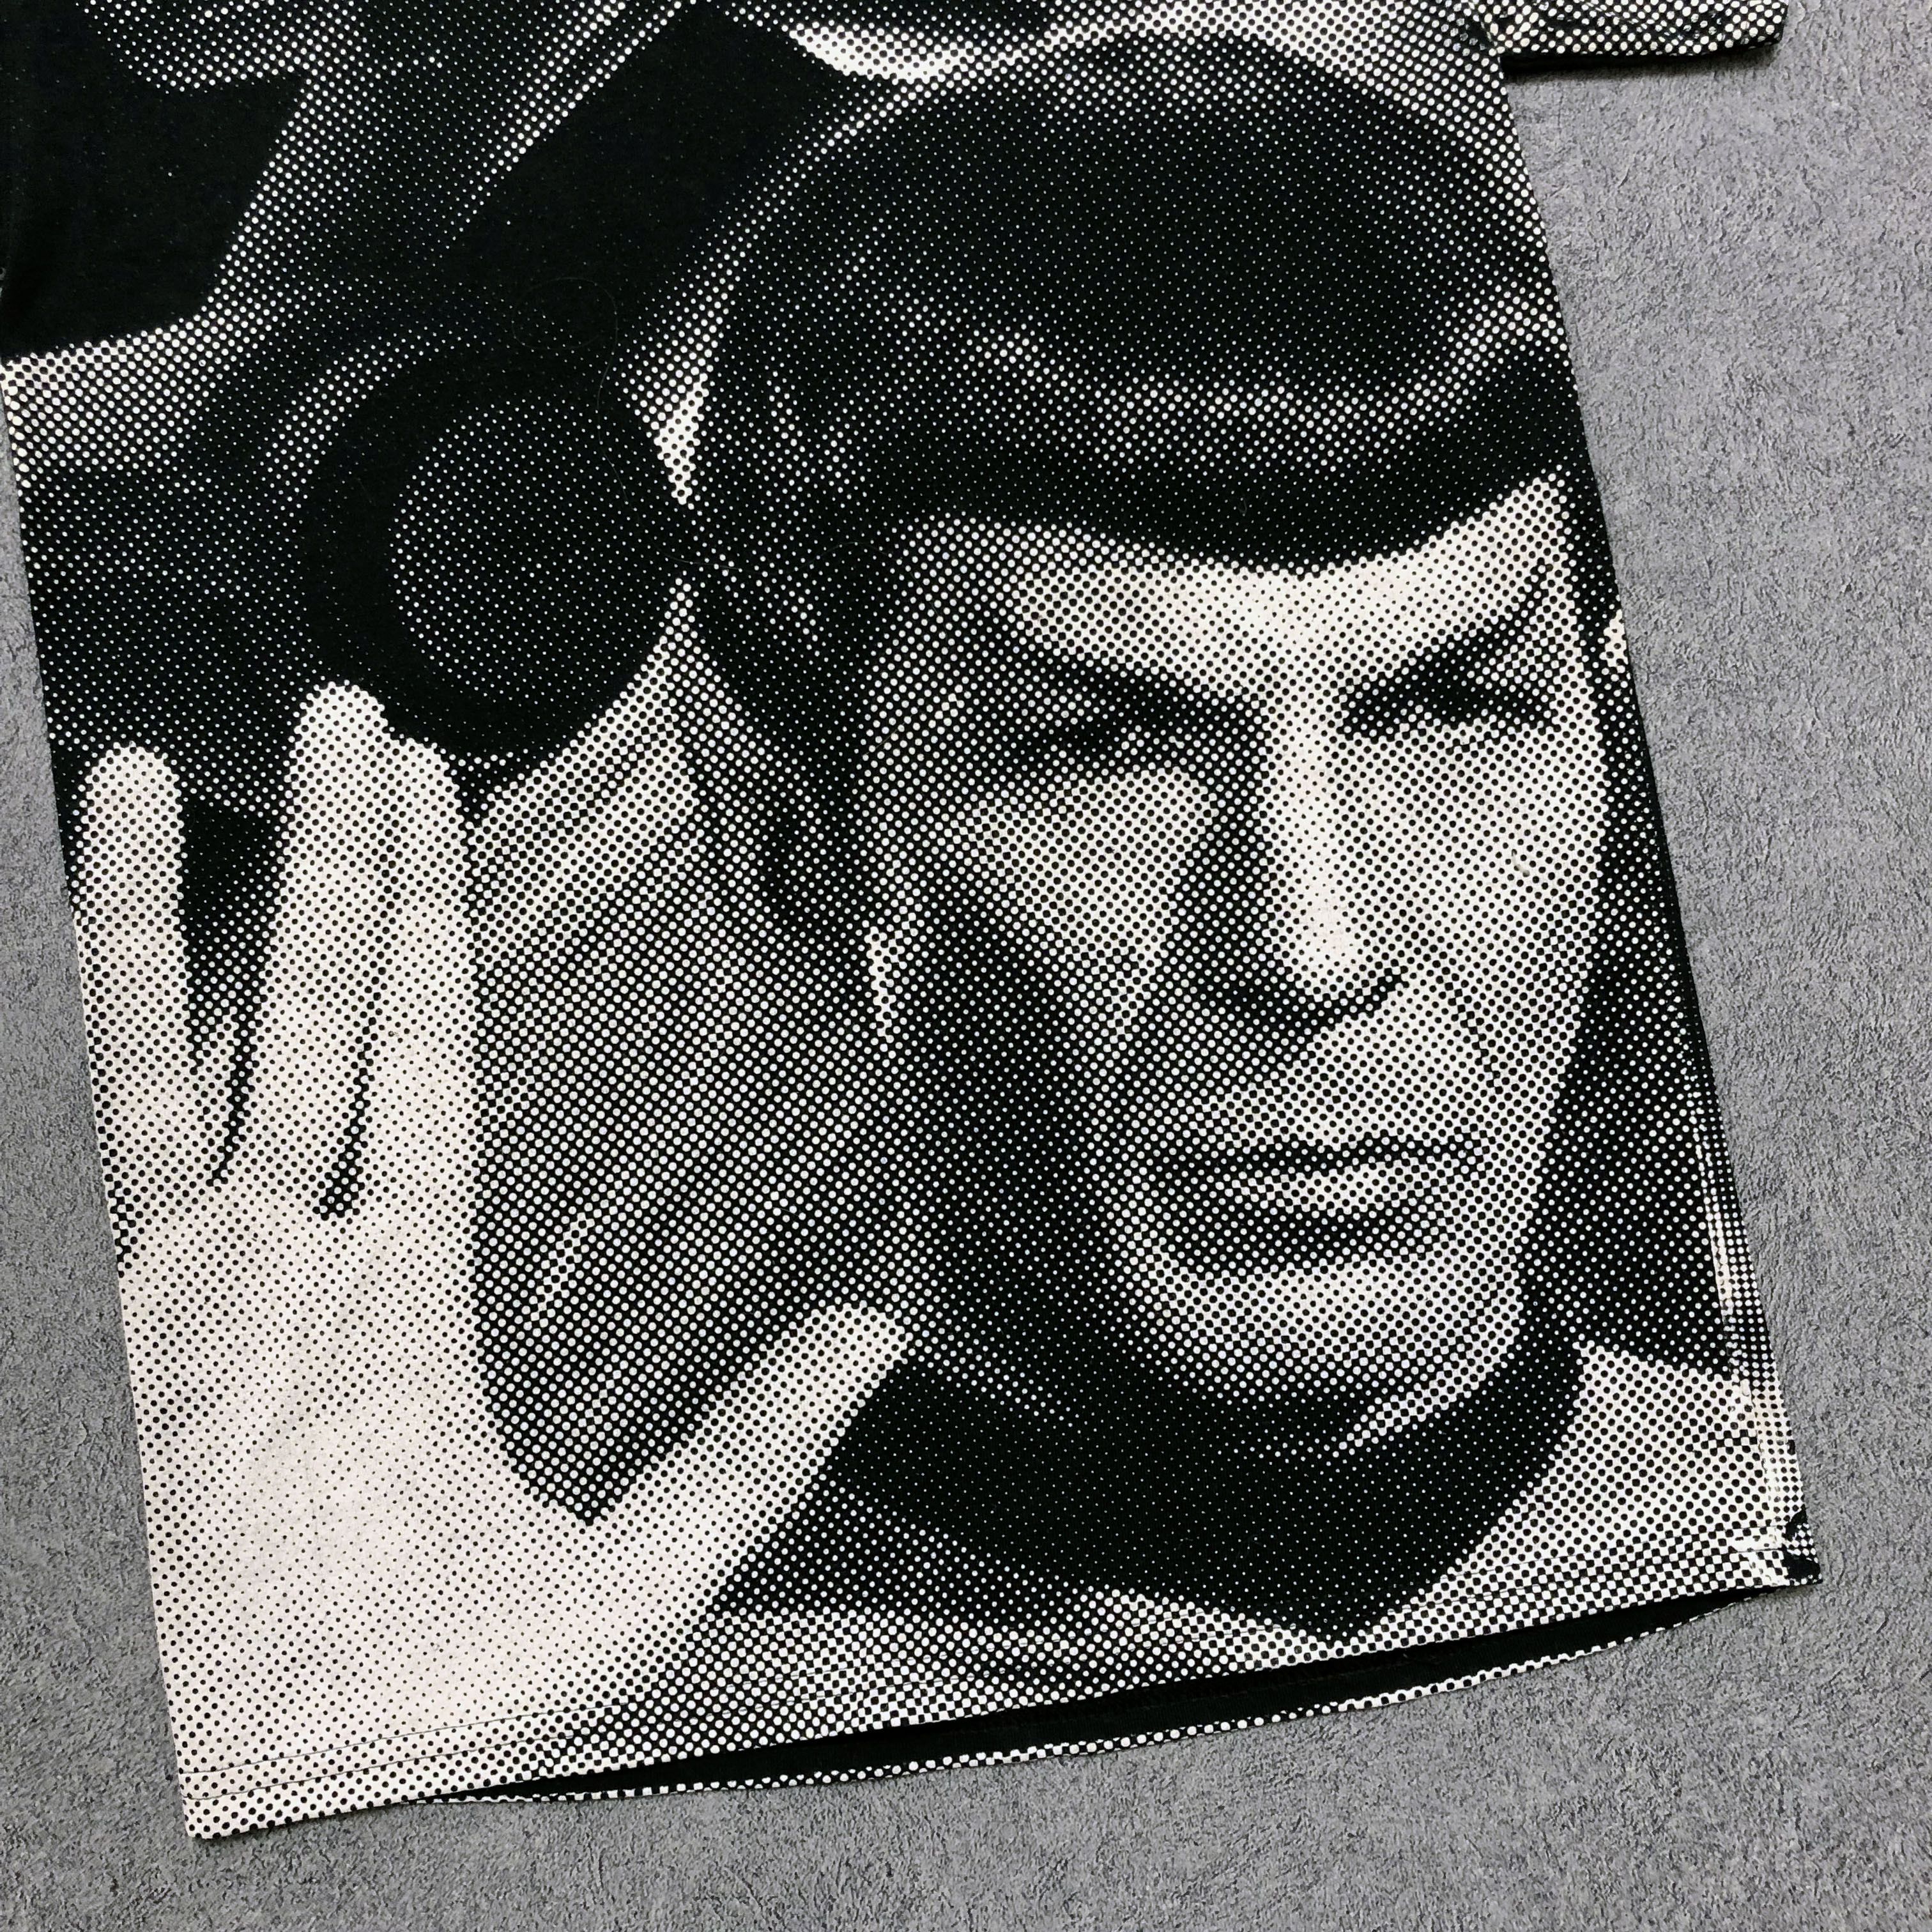 Vintage Star Trek All Over Print Vintage Movie Tees Size US S / EU 44-46 / 1 - 3 Thumbnail